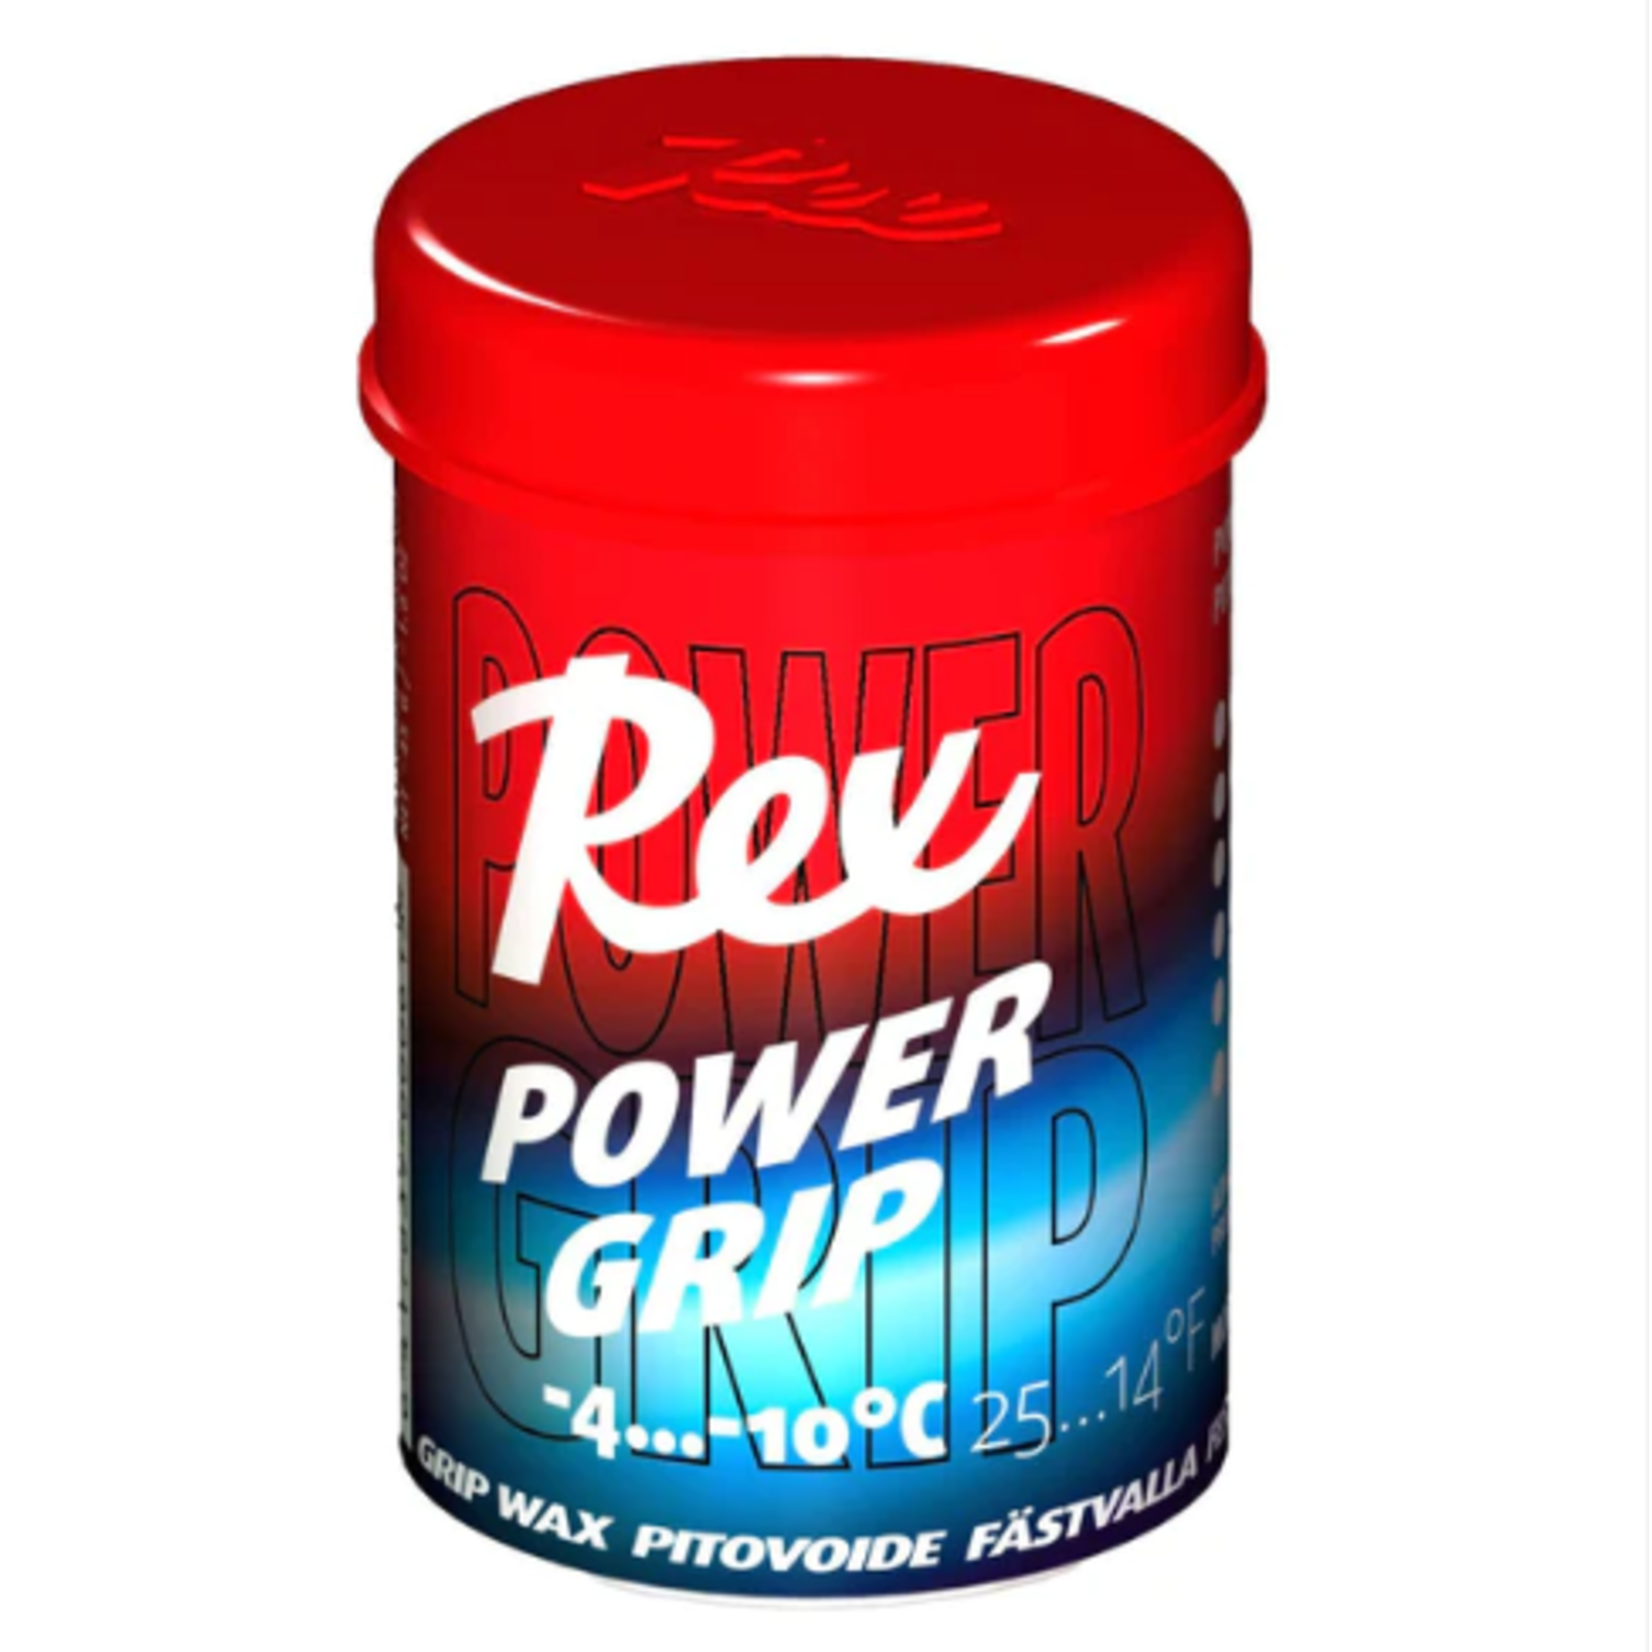 Rex Power Grip Fluoro Free 45g